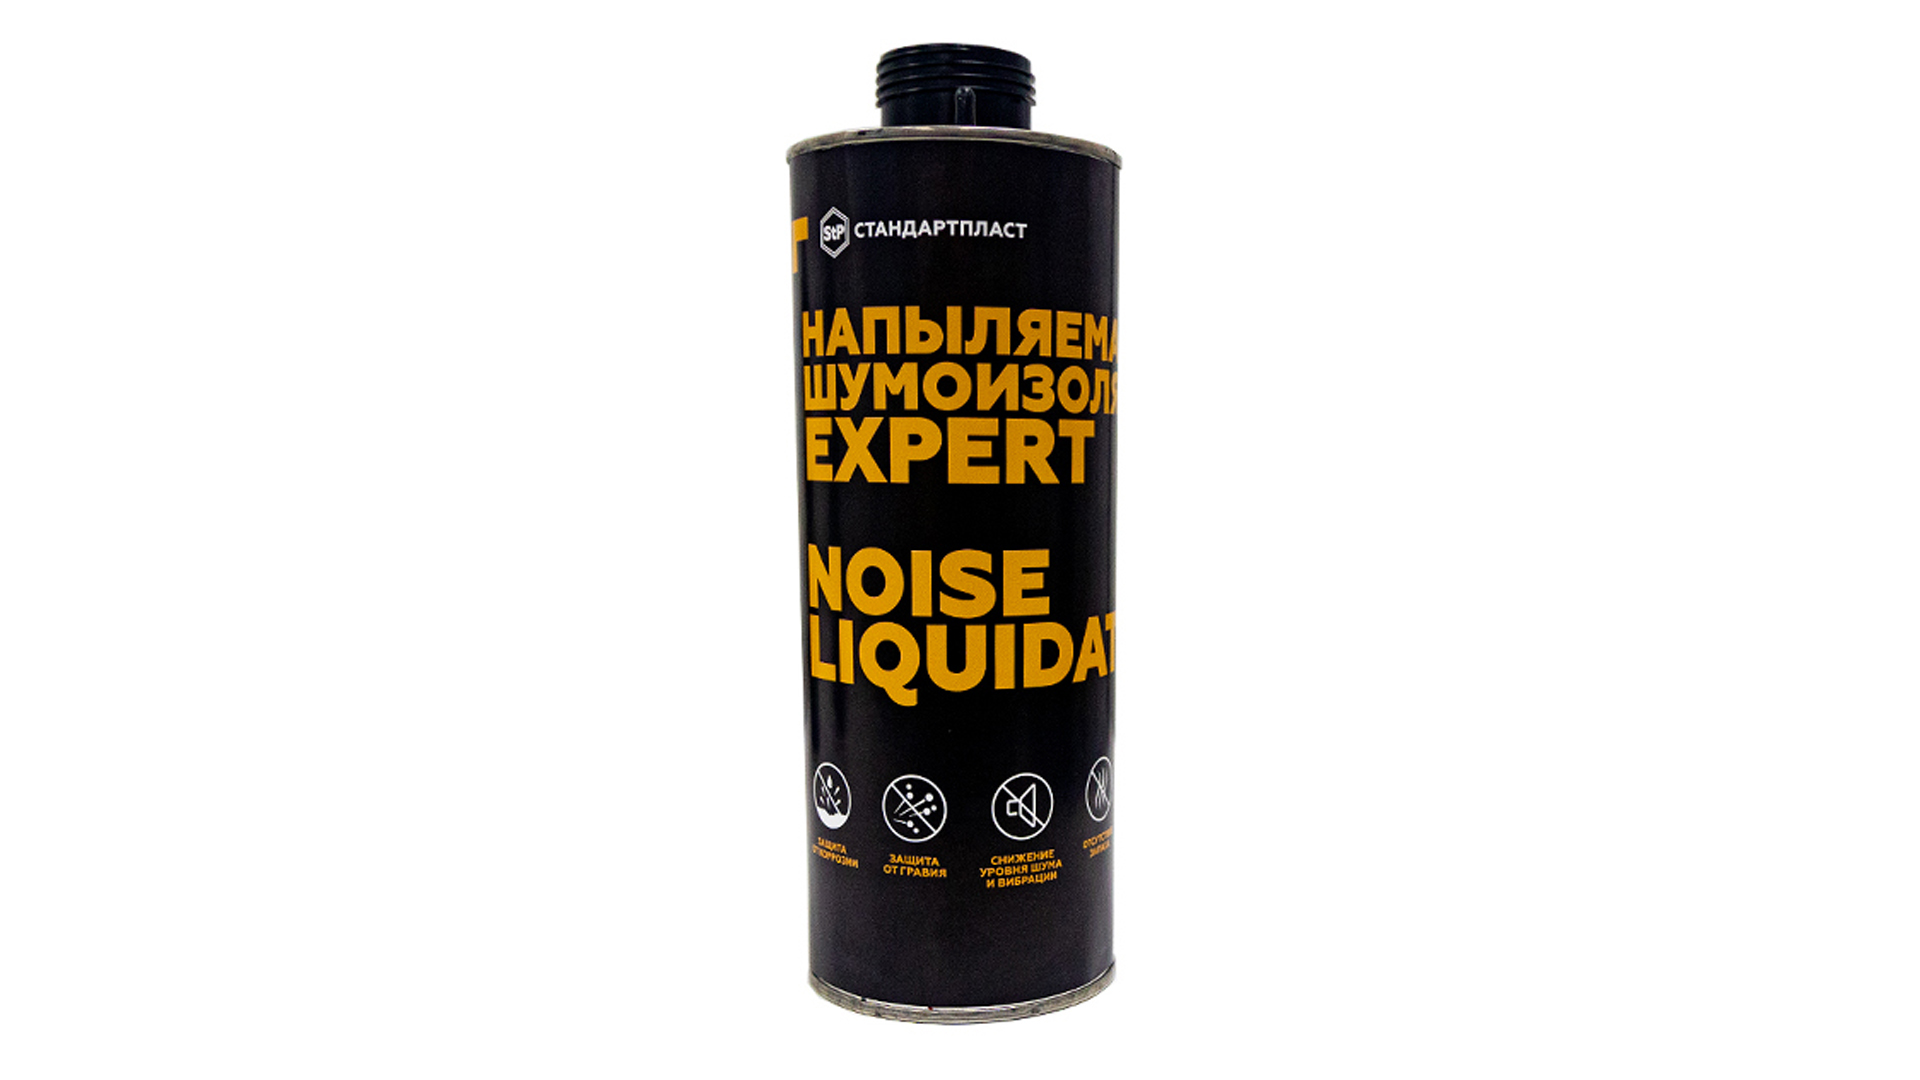 Напыляемая шумоизоляция NoiseLiquidator Expert от компании Стандартпласт